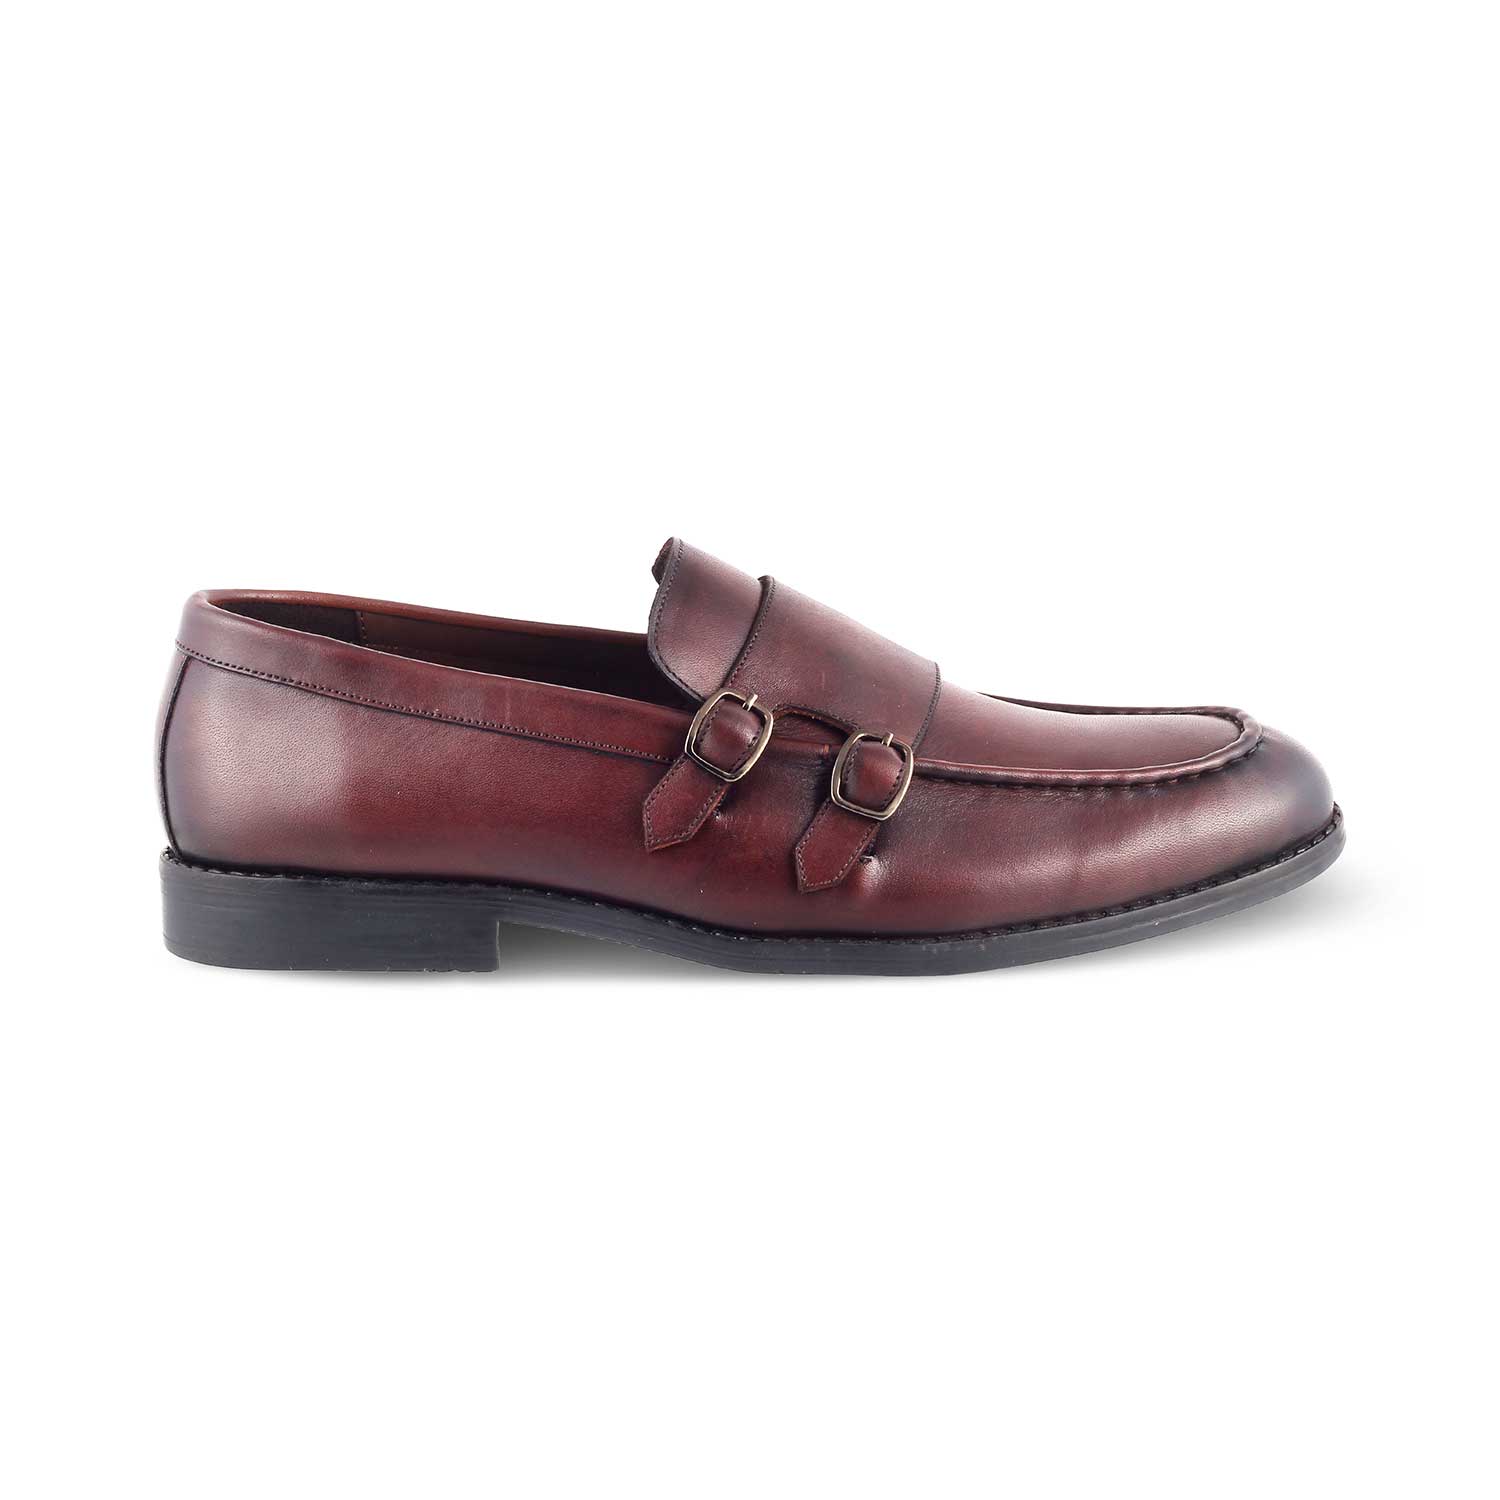 The Bondy Brown Men's Double Monk Shoes Tresmode